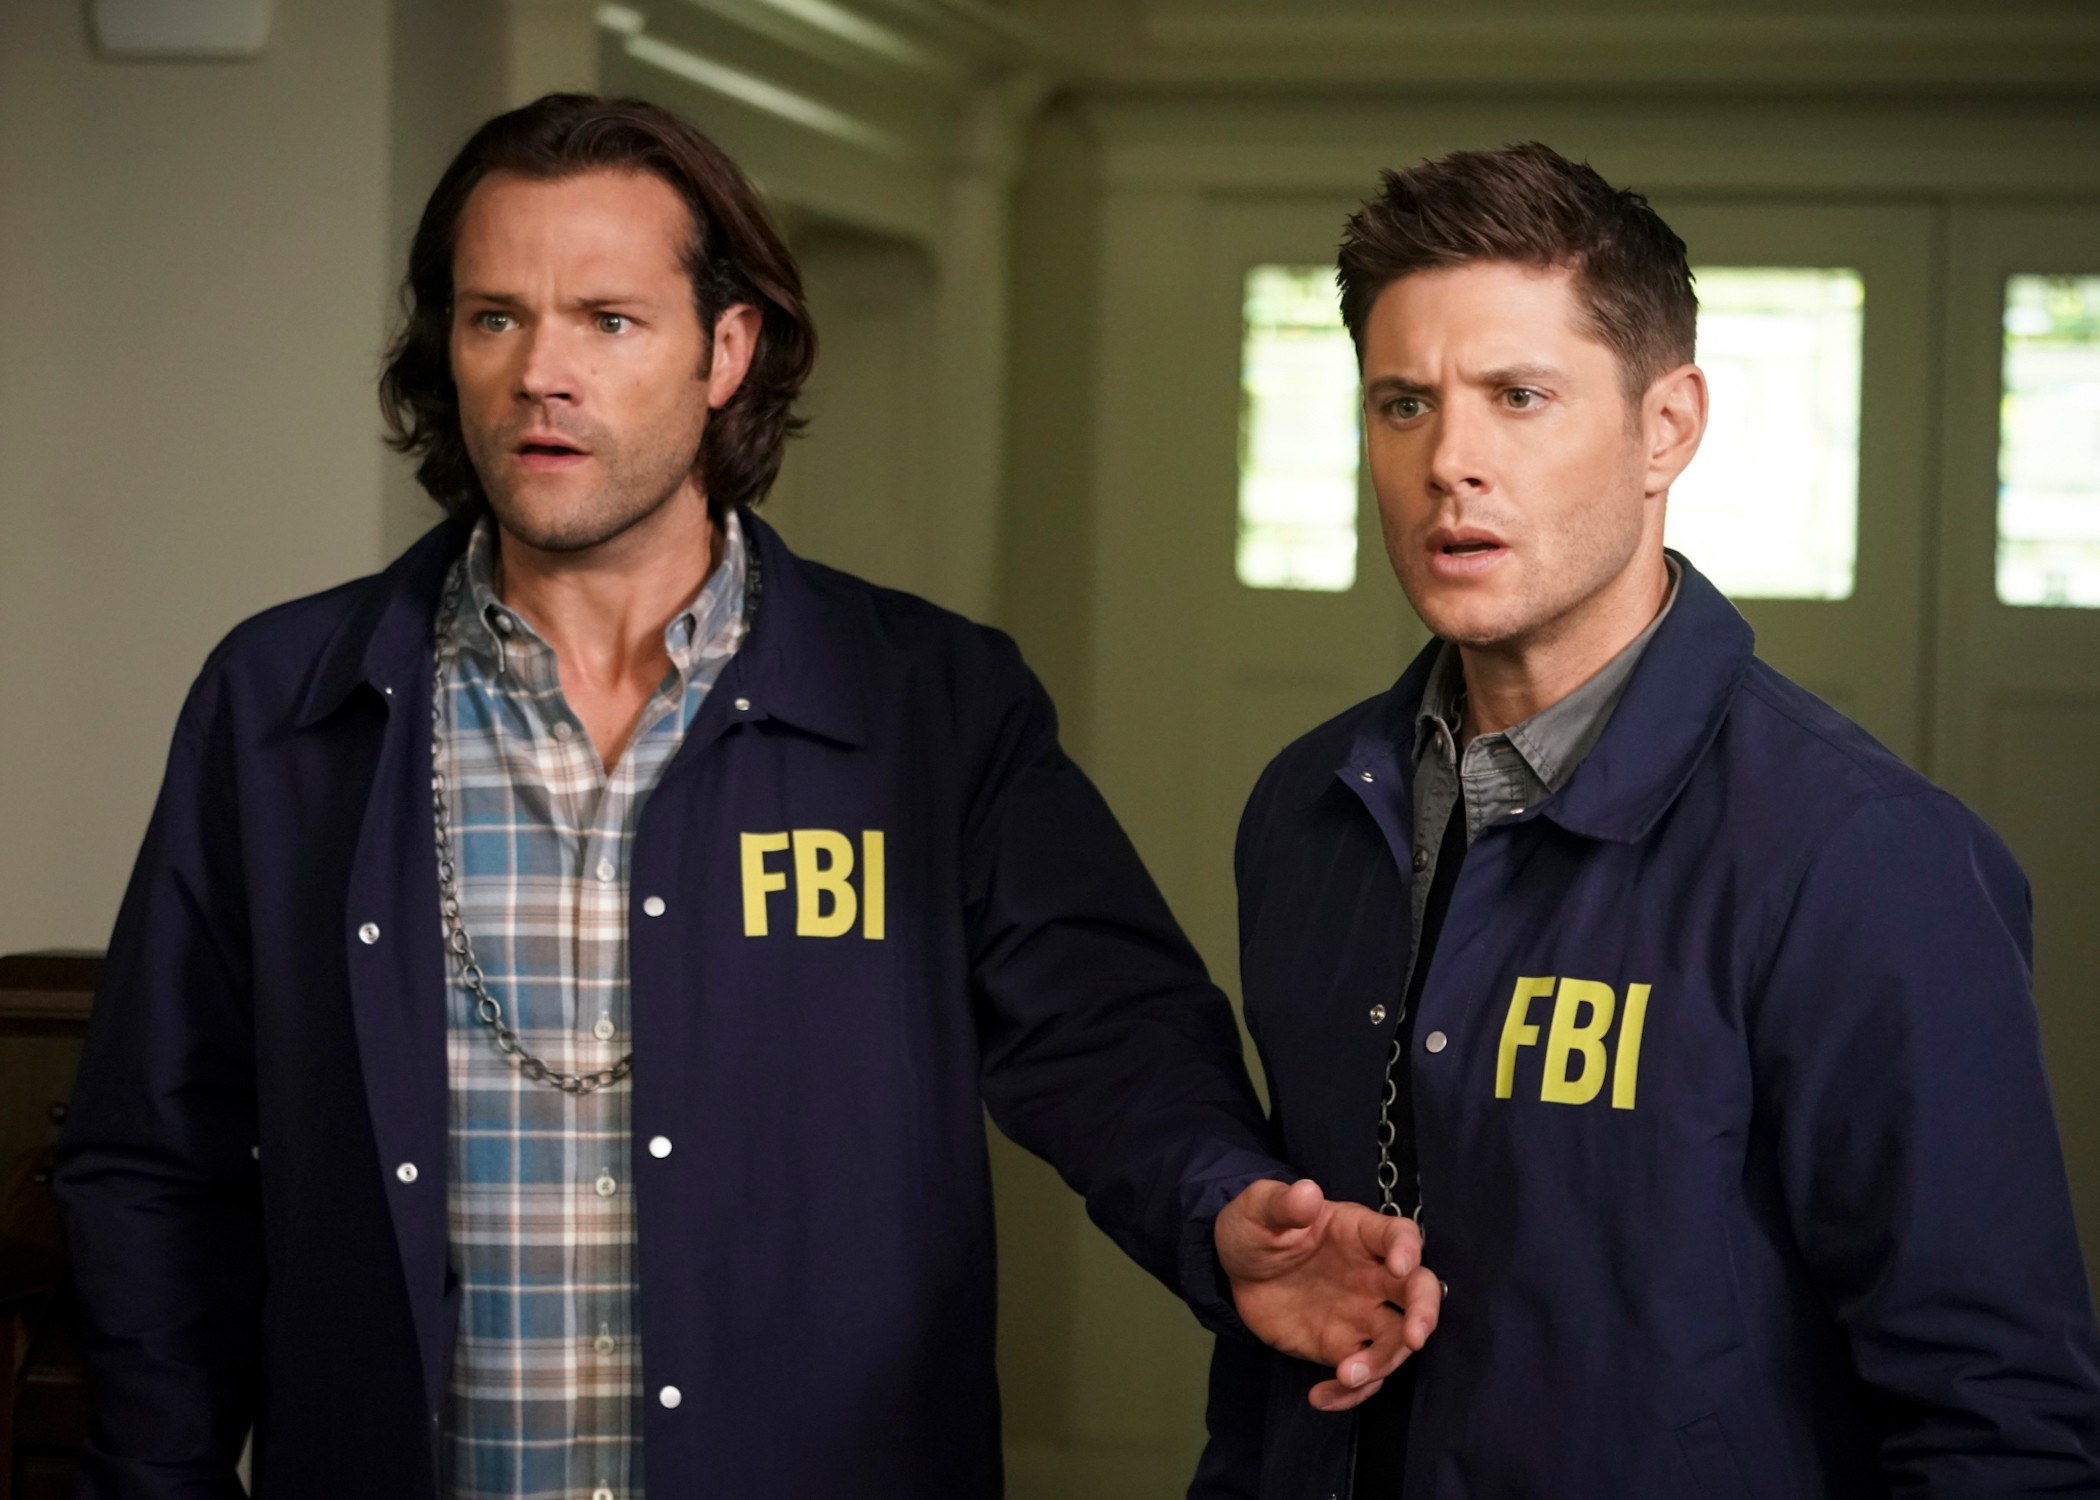 sam and dean wearing FBI jackets